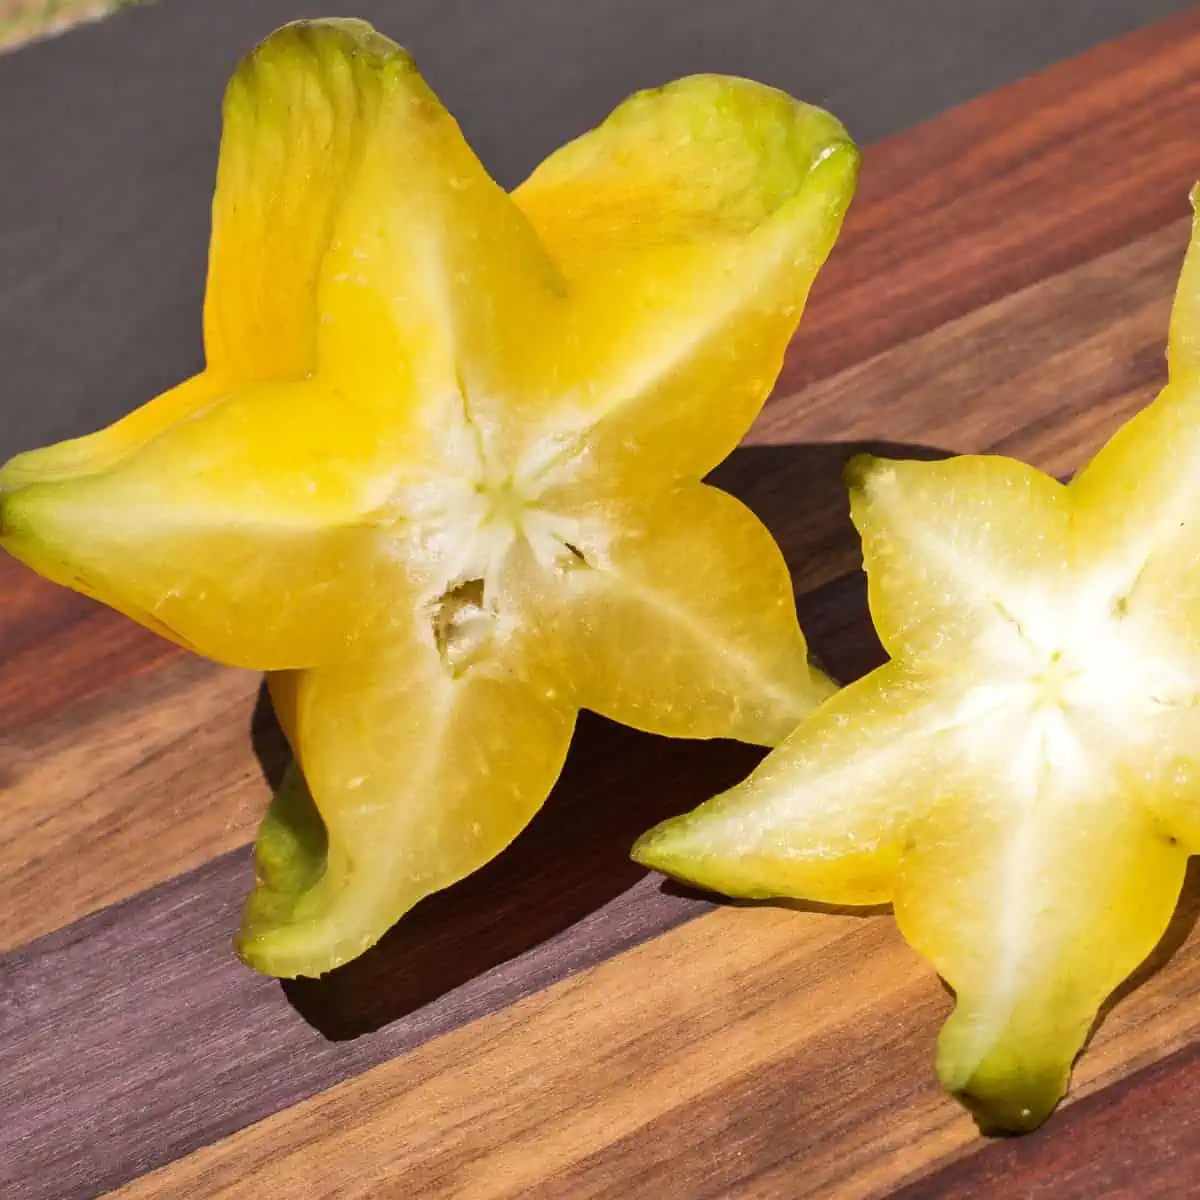 Starfruit cut in half.
